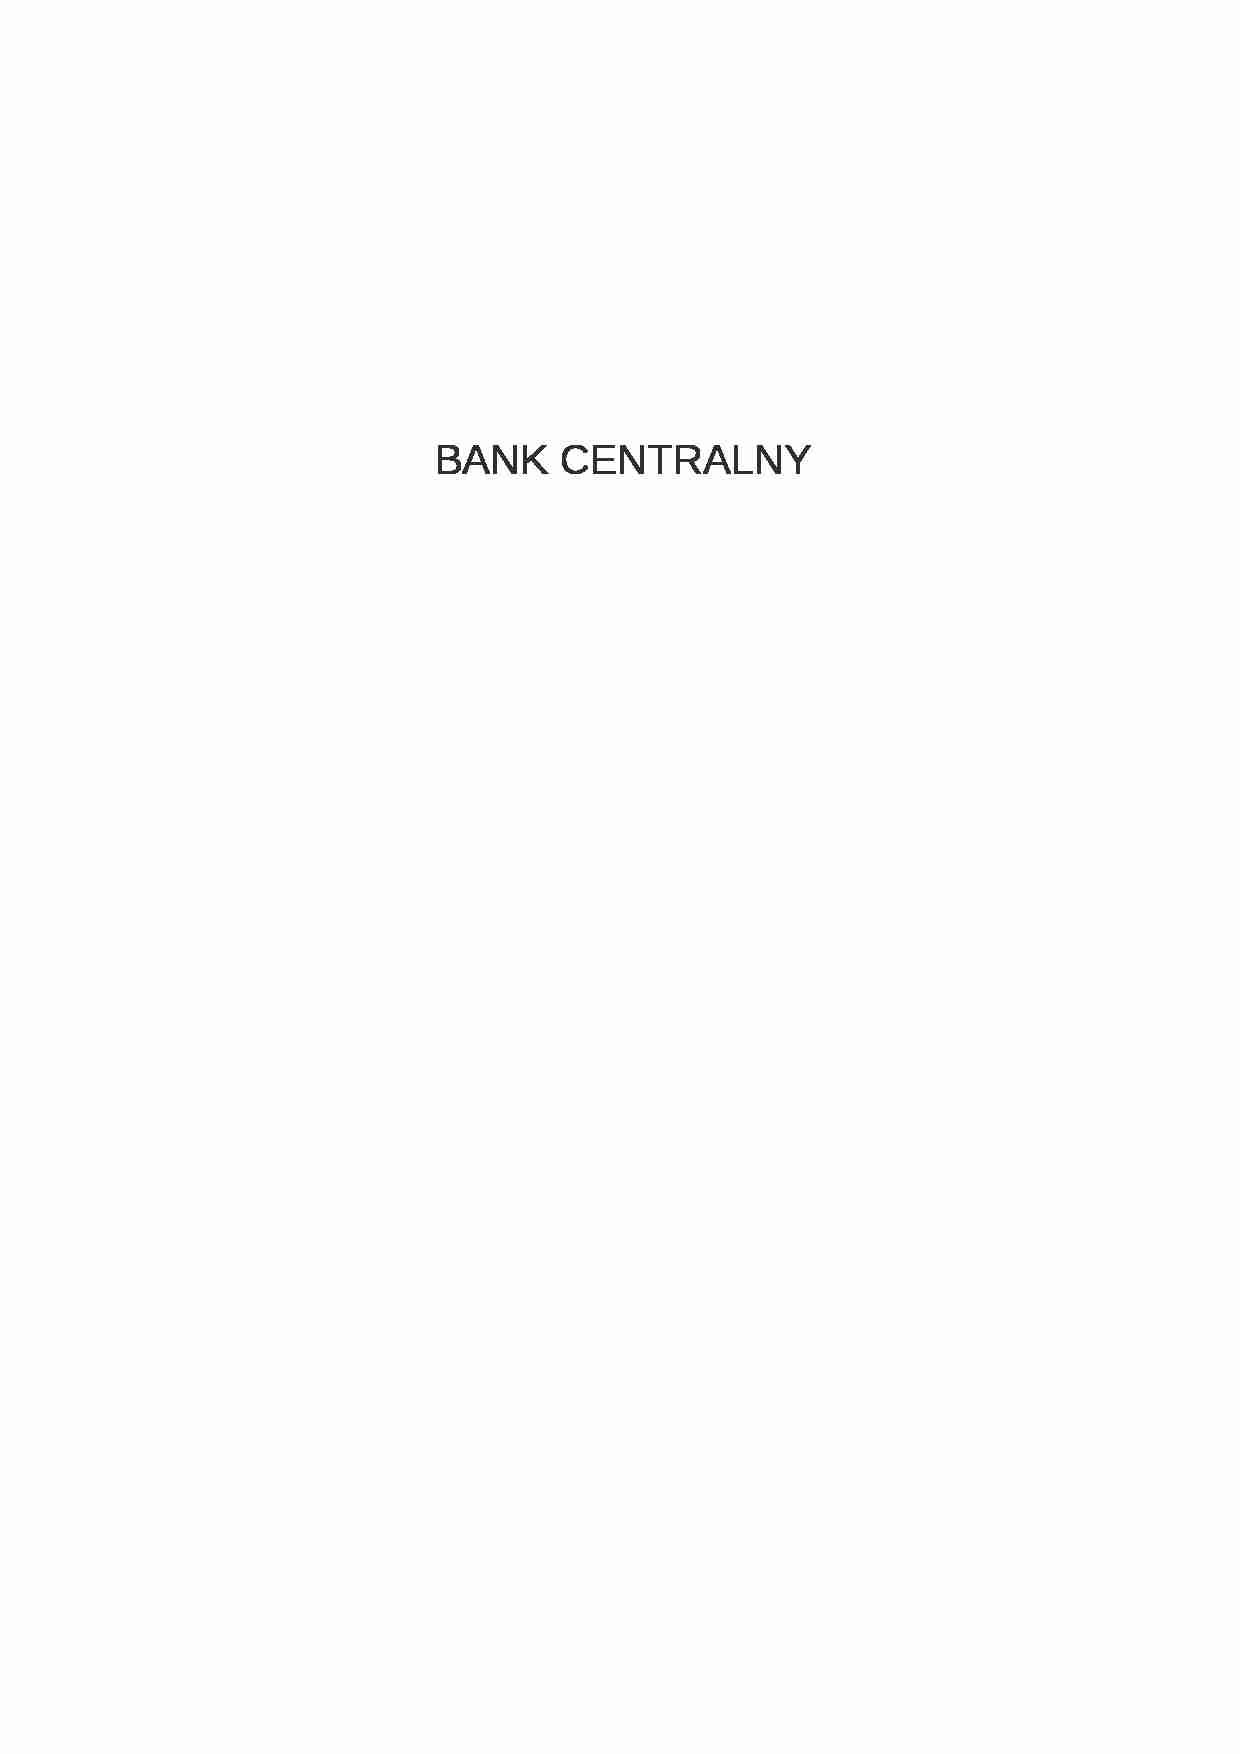 Bank centralny - Status prawny - strona 1